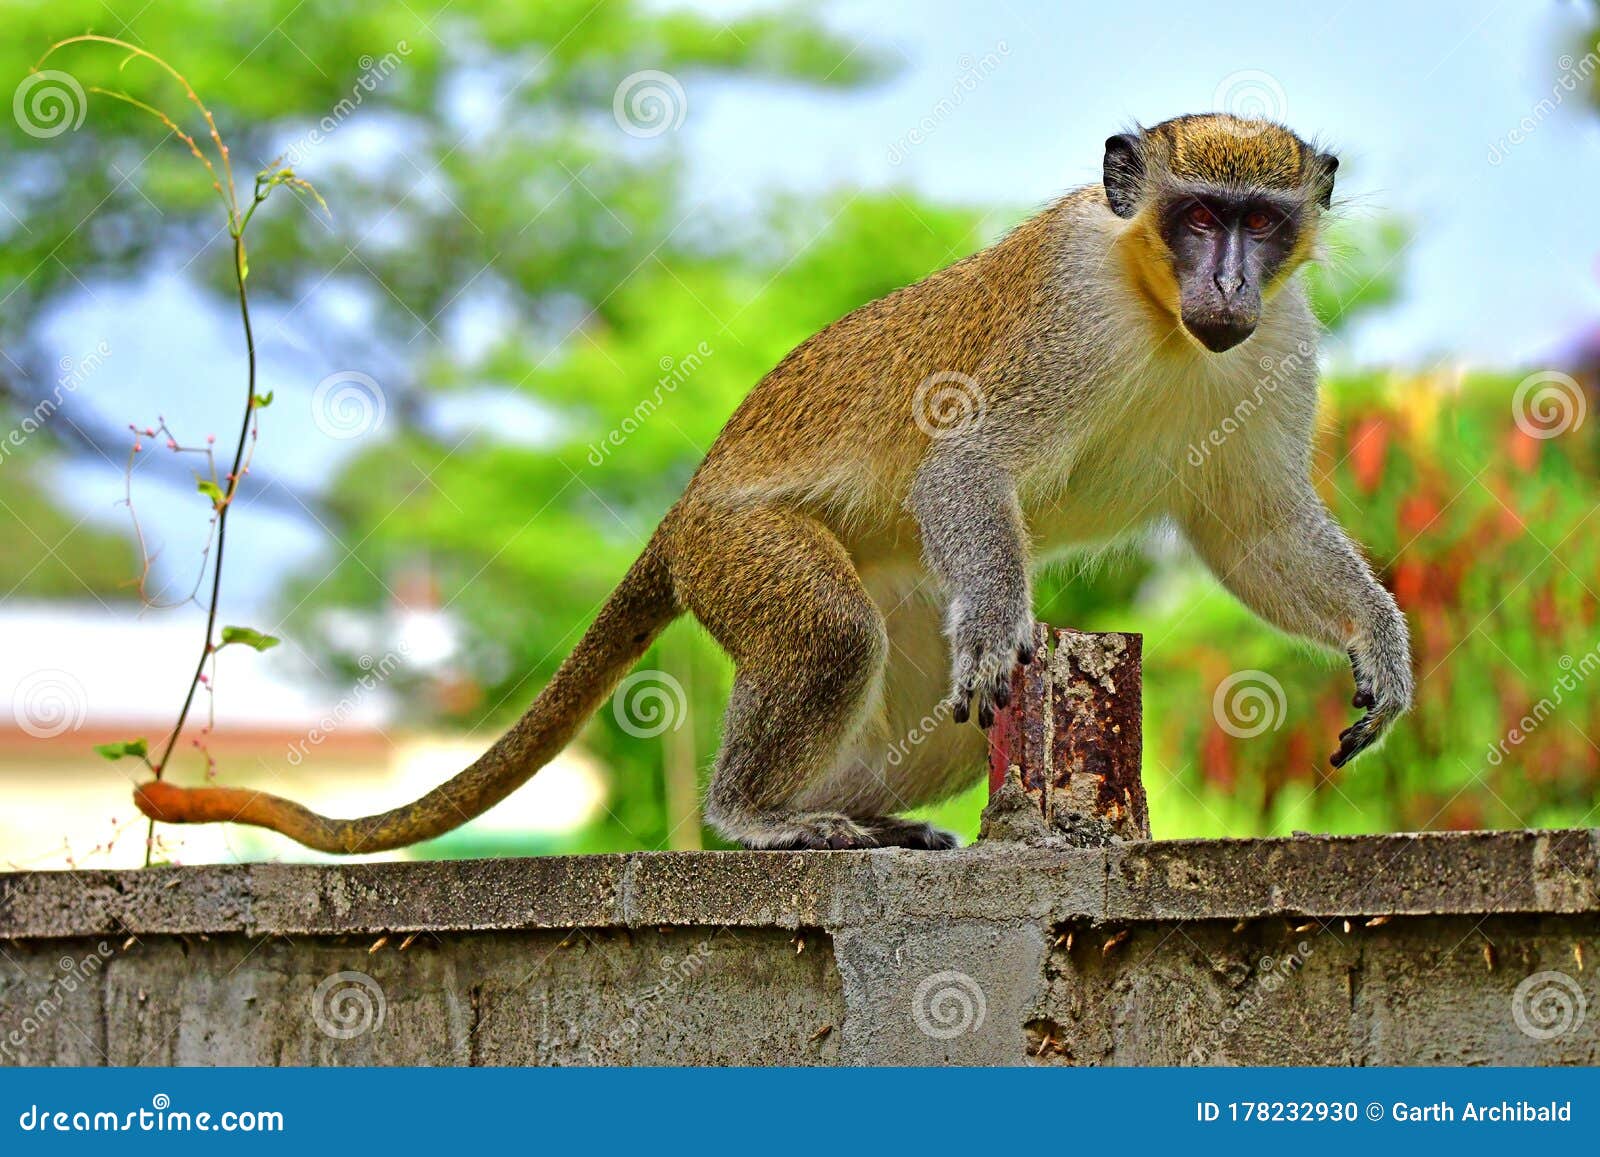 green vervet monkey 3